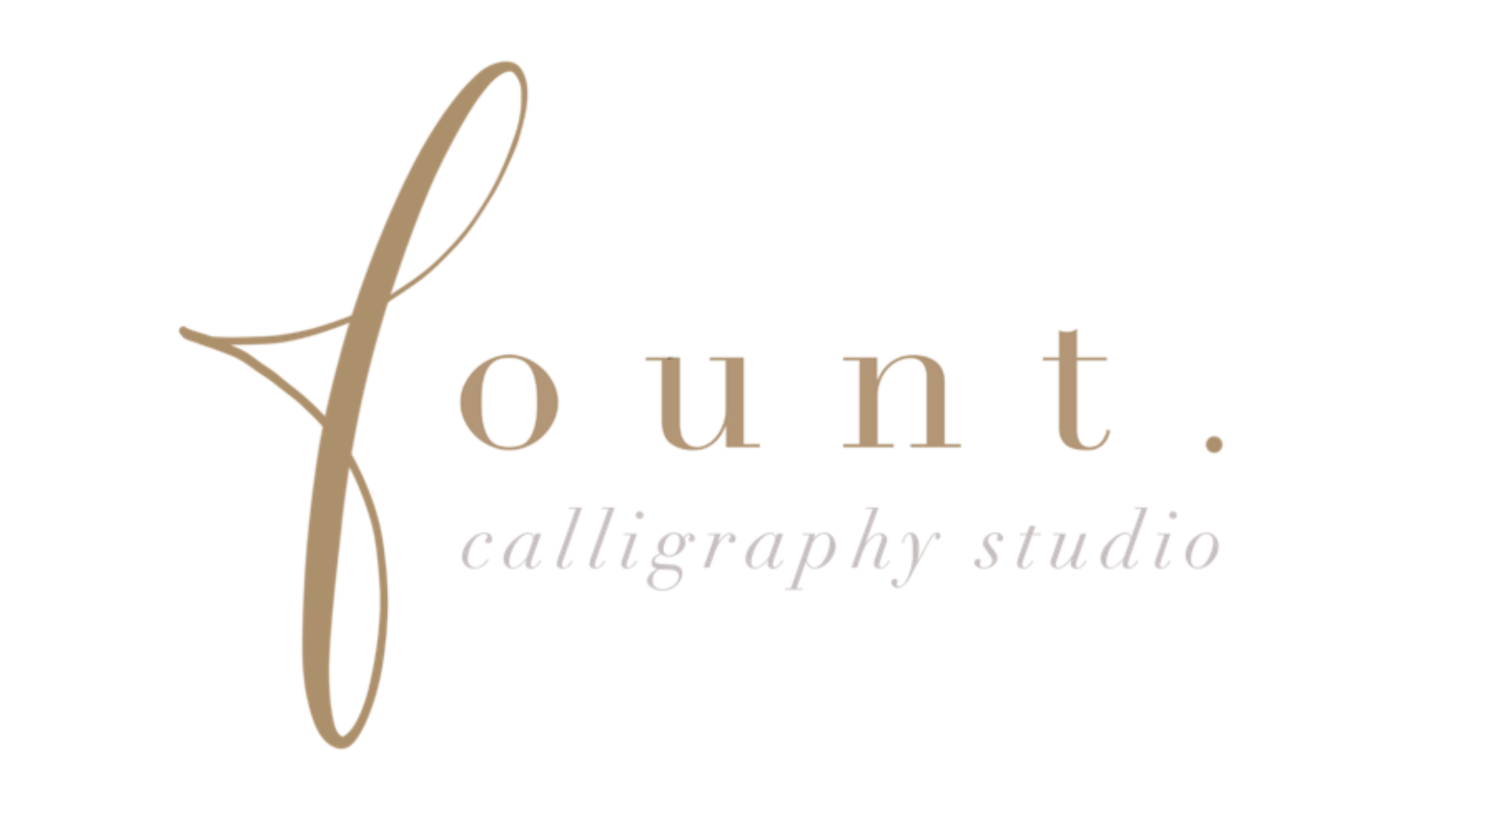 fount calligraphy